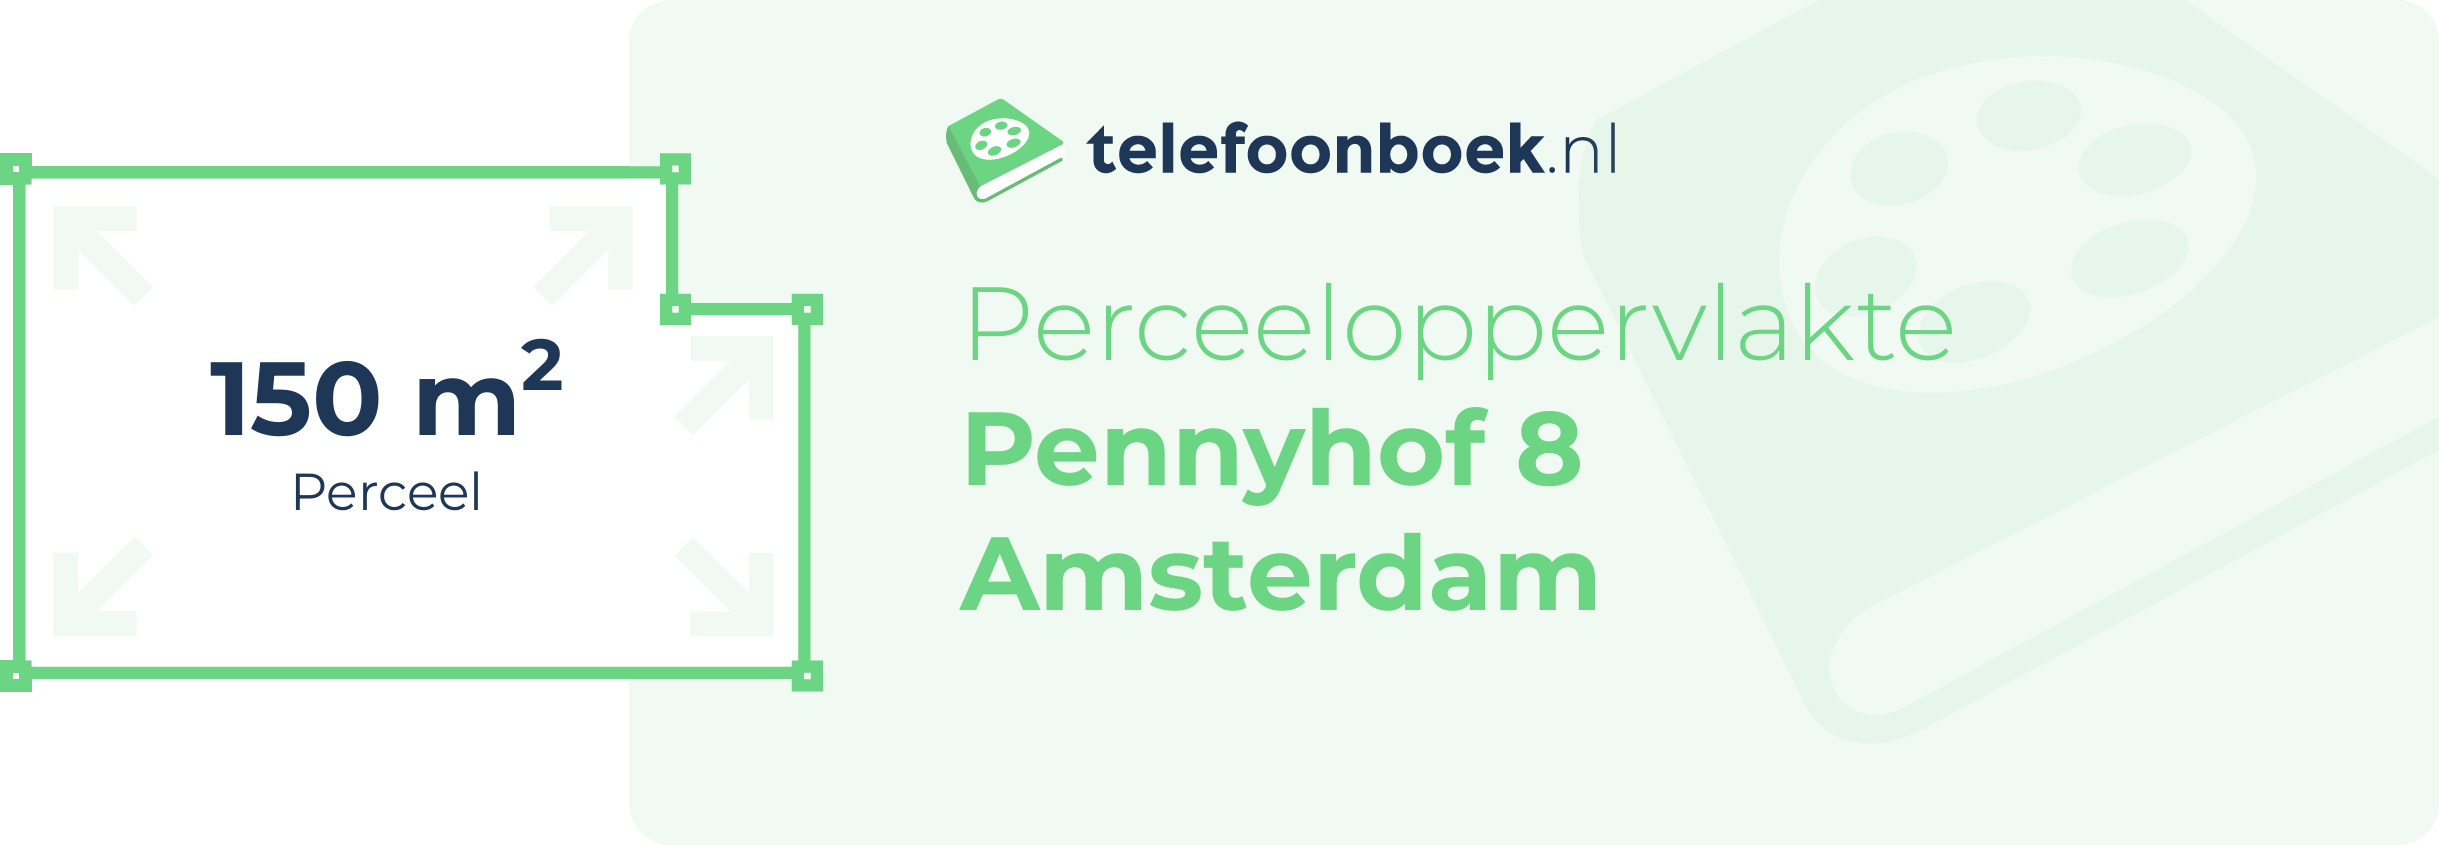 Perceeloppervlakte Pennyhof 8 Amsterdam